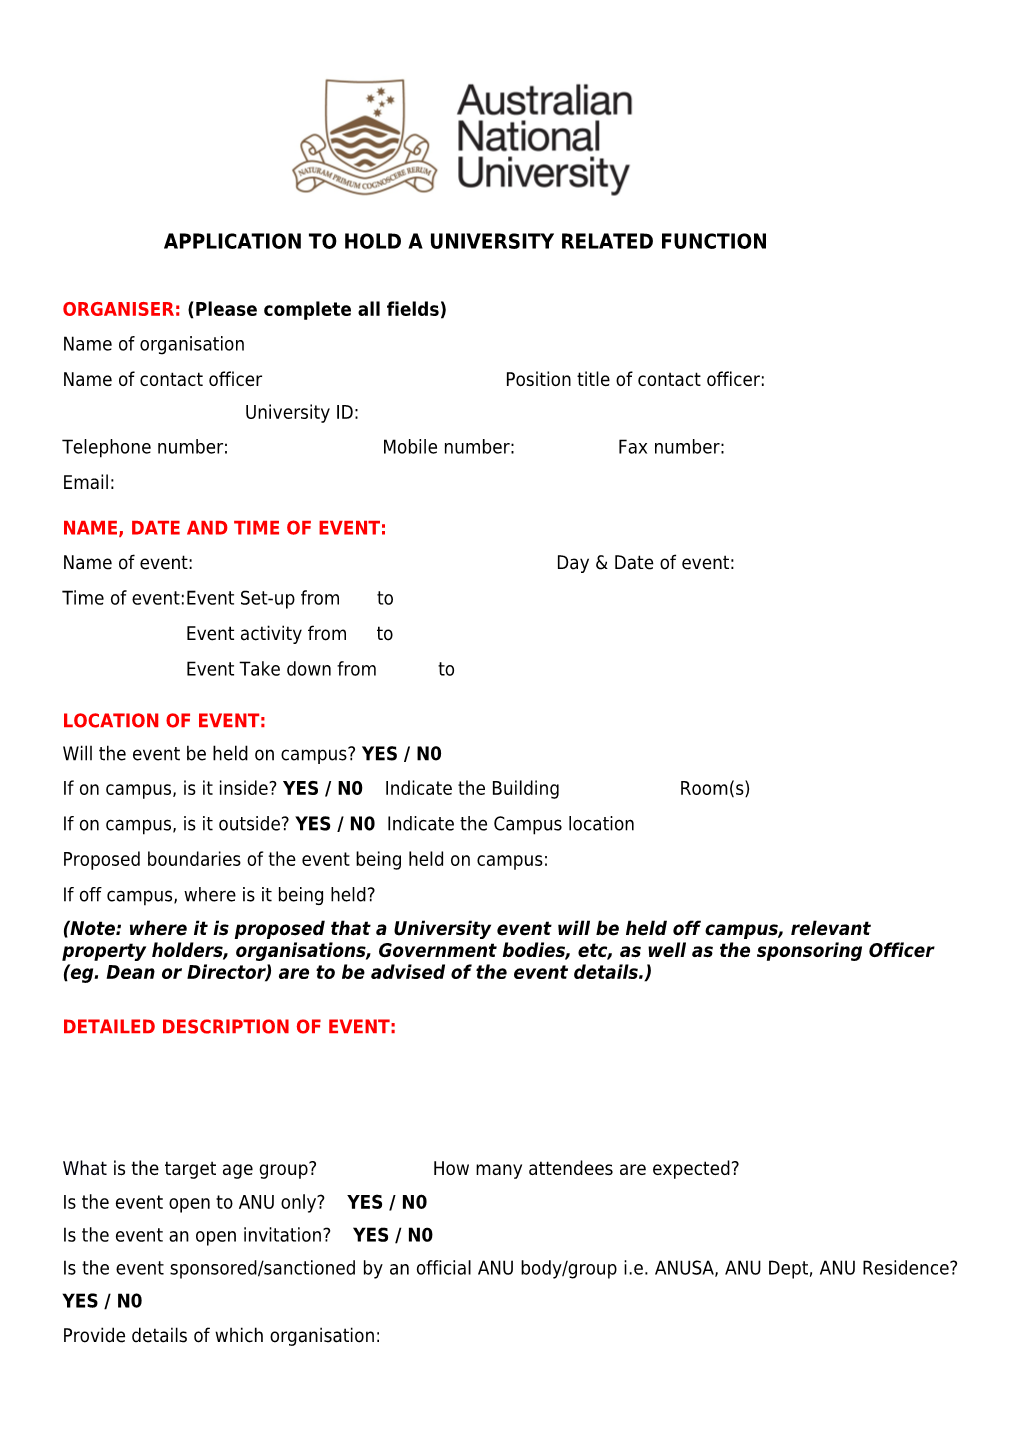 Event Application Form June 2008